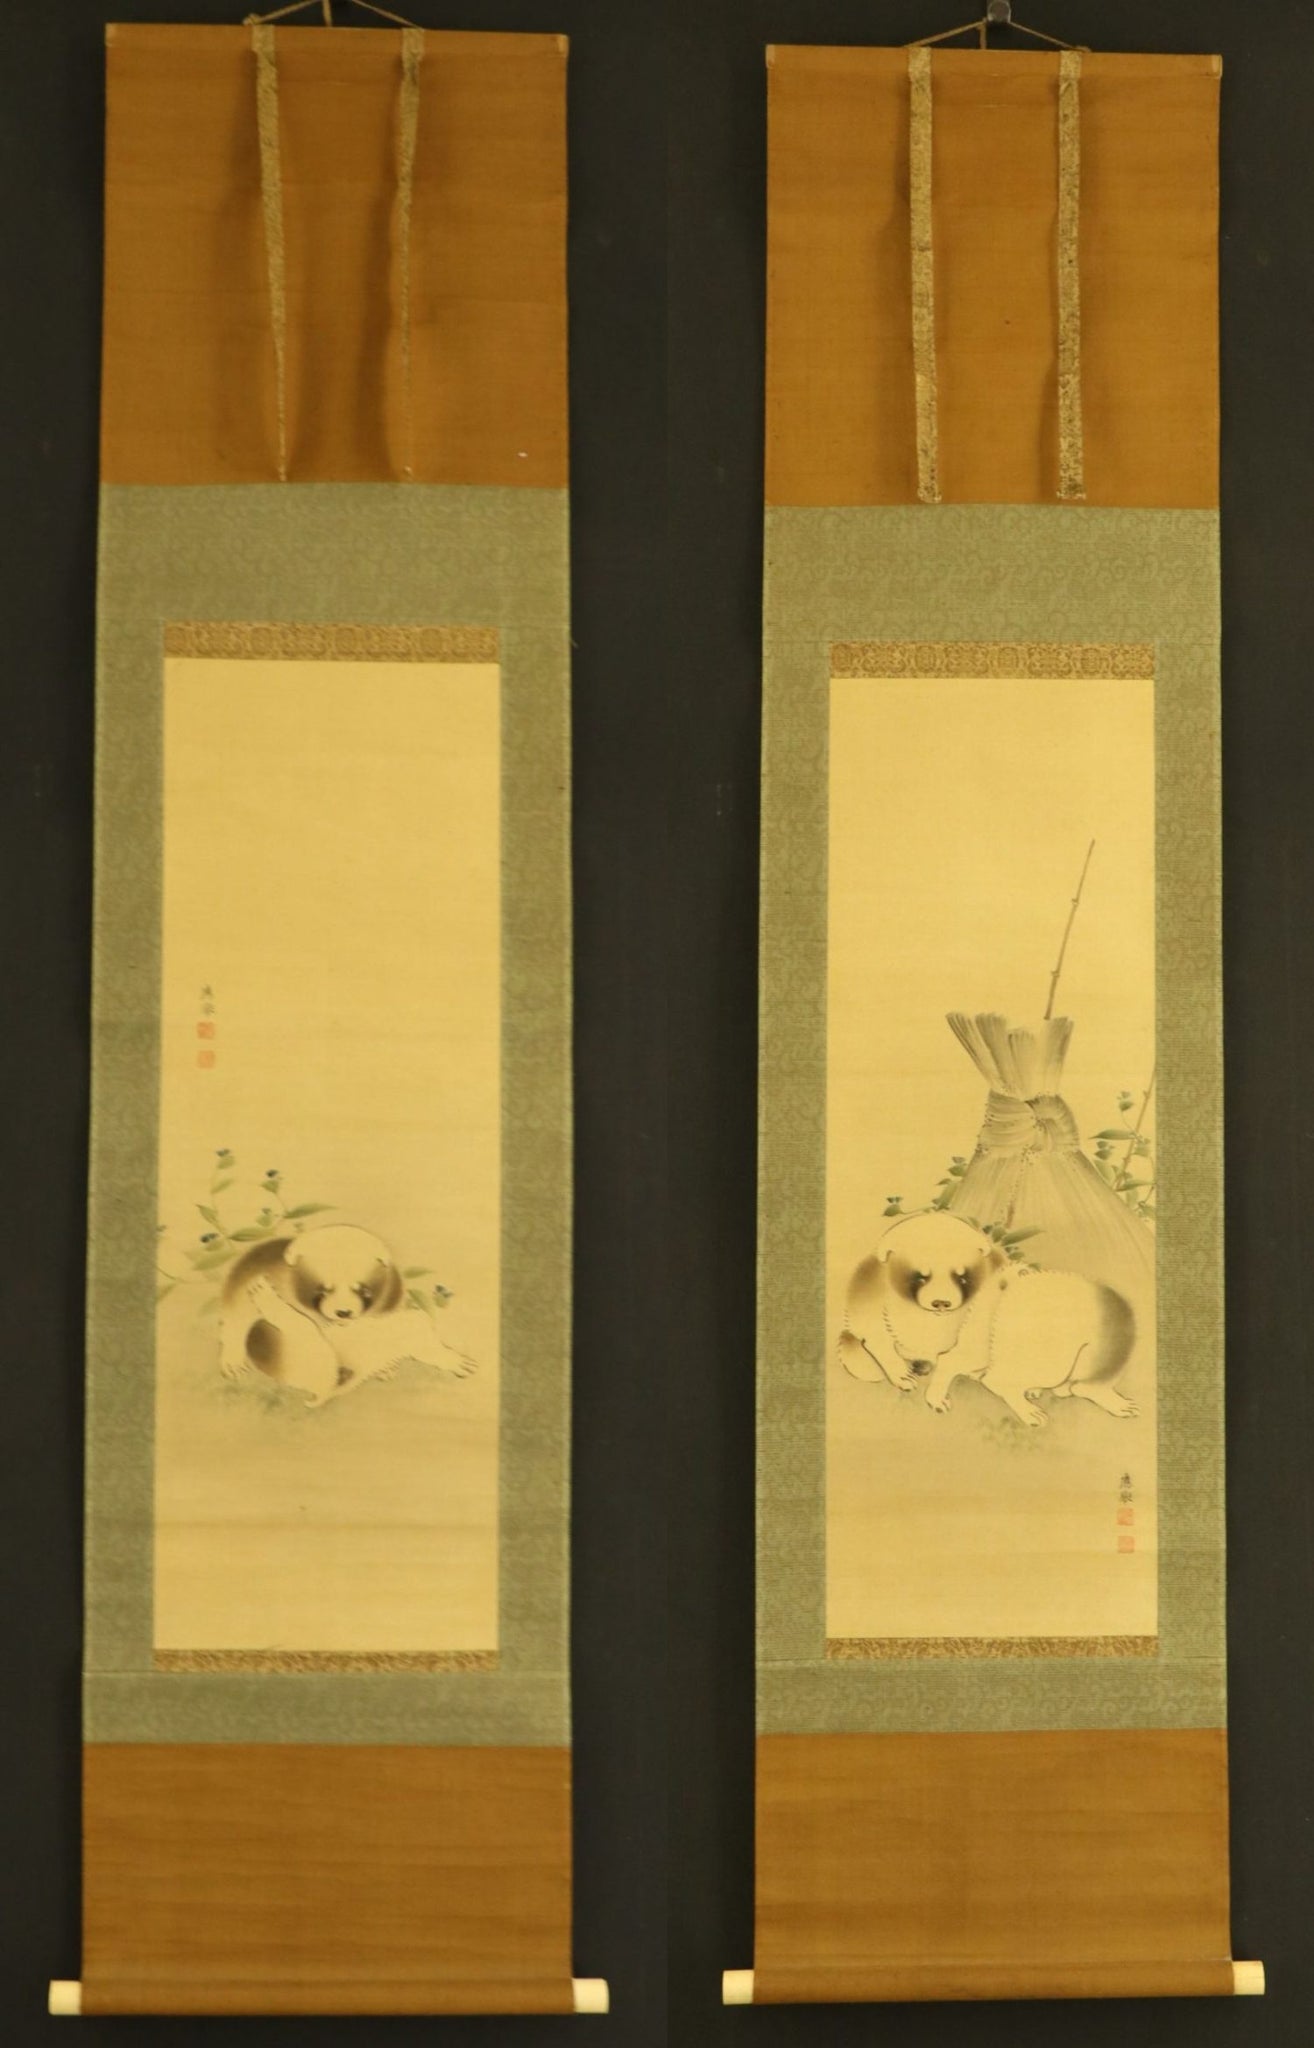 Hanging Scrolls "Dogs" Maruyama Okyo - Japan - XVIII c